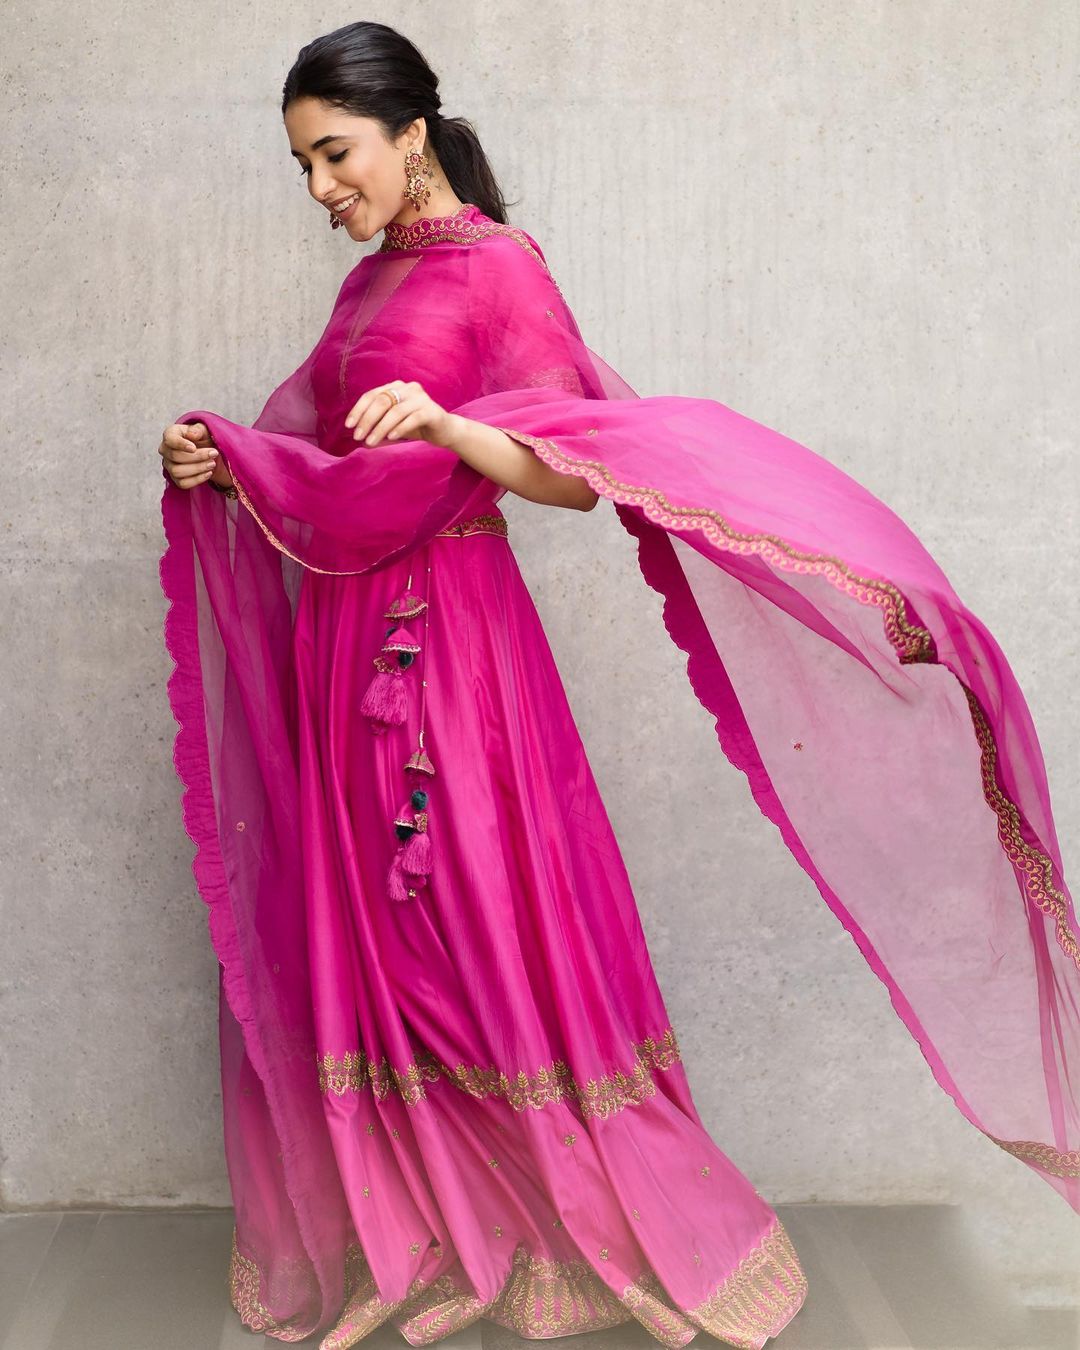 priyanka mohan hot photos in pink long dress